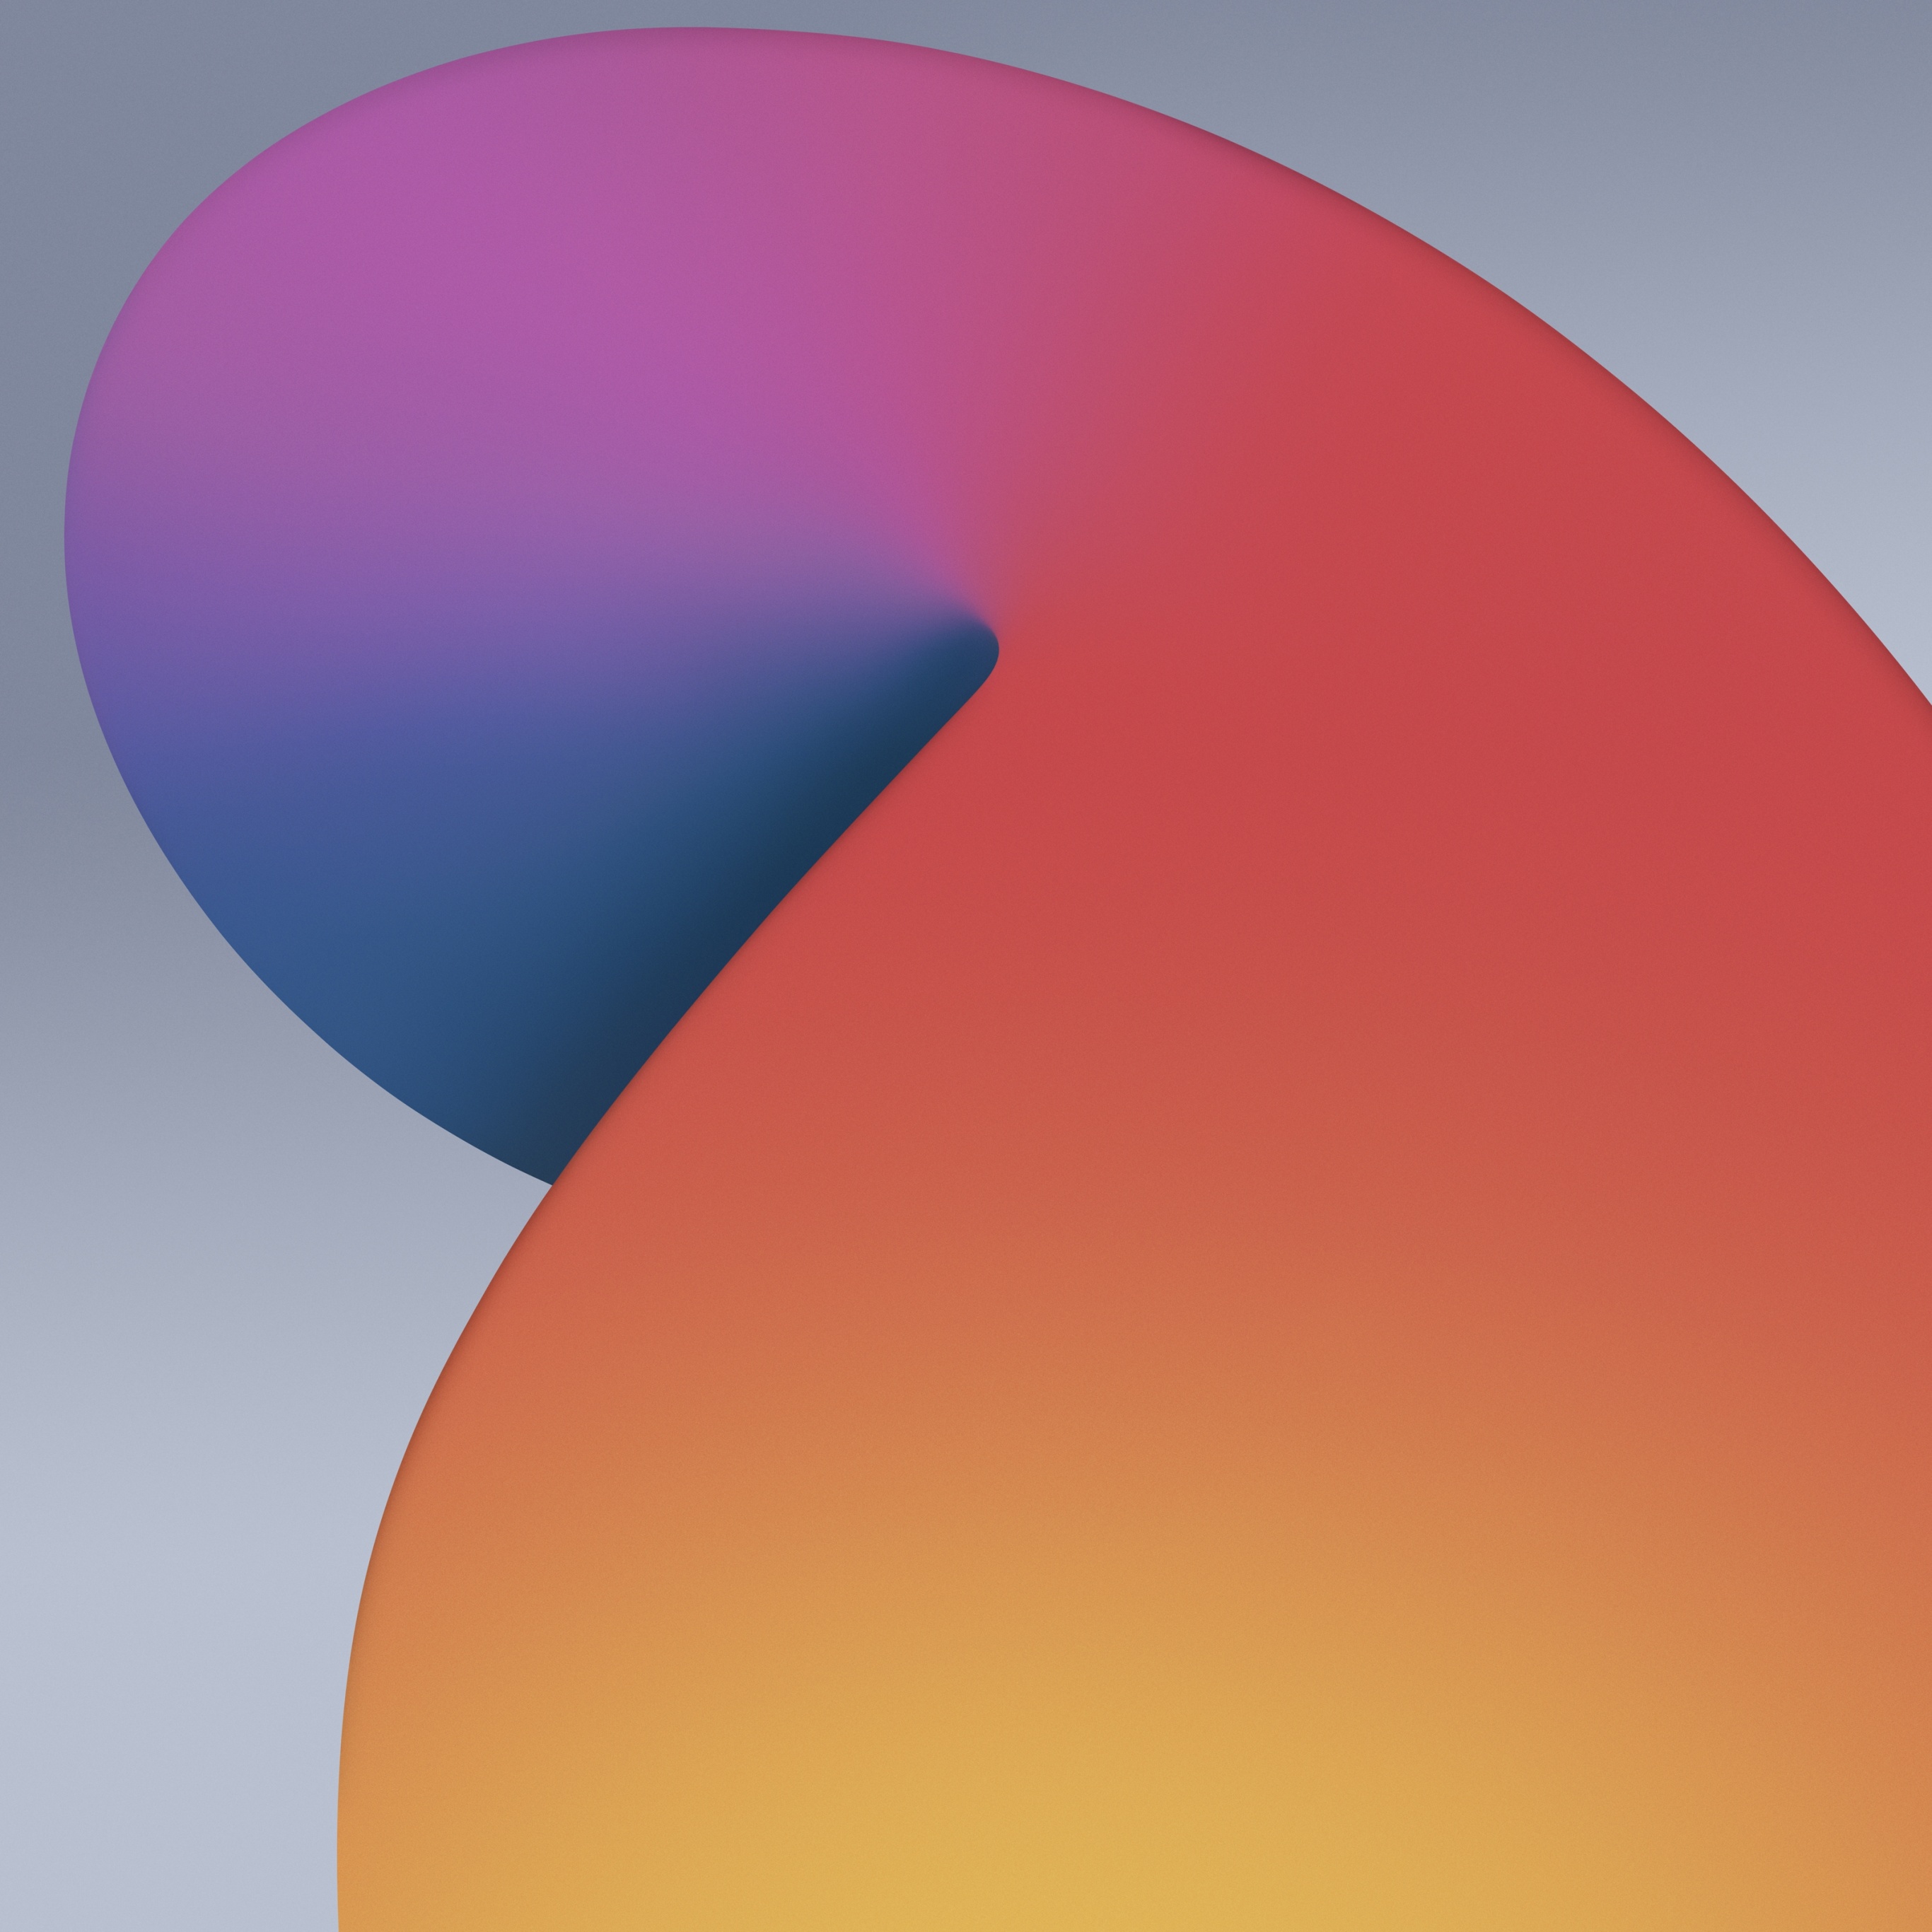 iPadOS Wallpaper 4K, Colorful, Light Mode